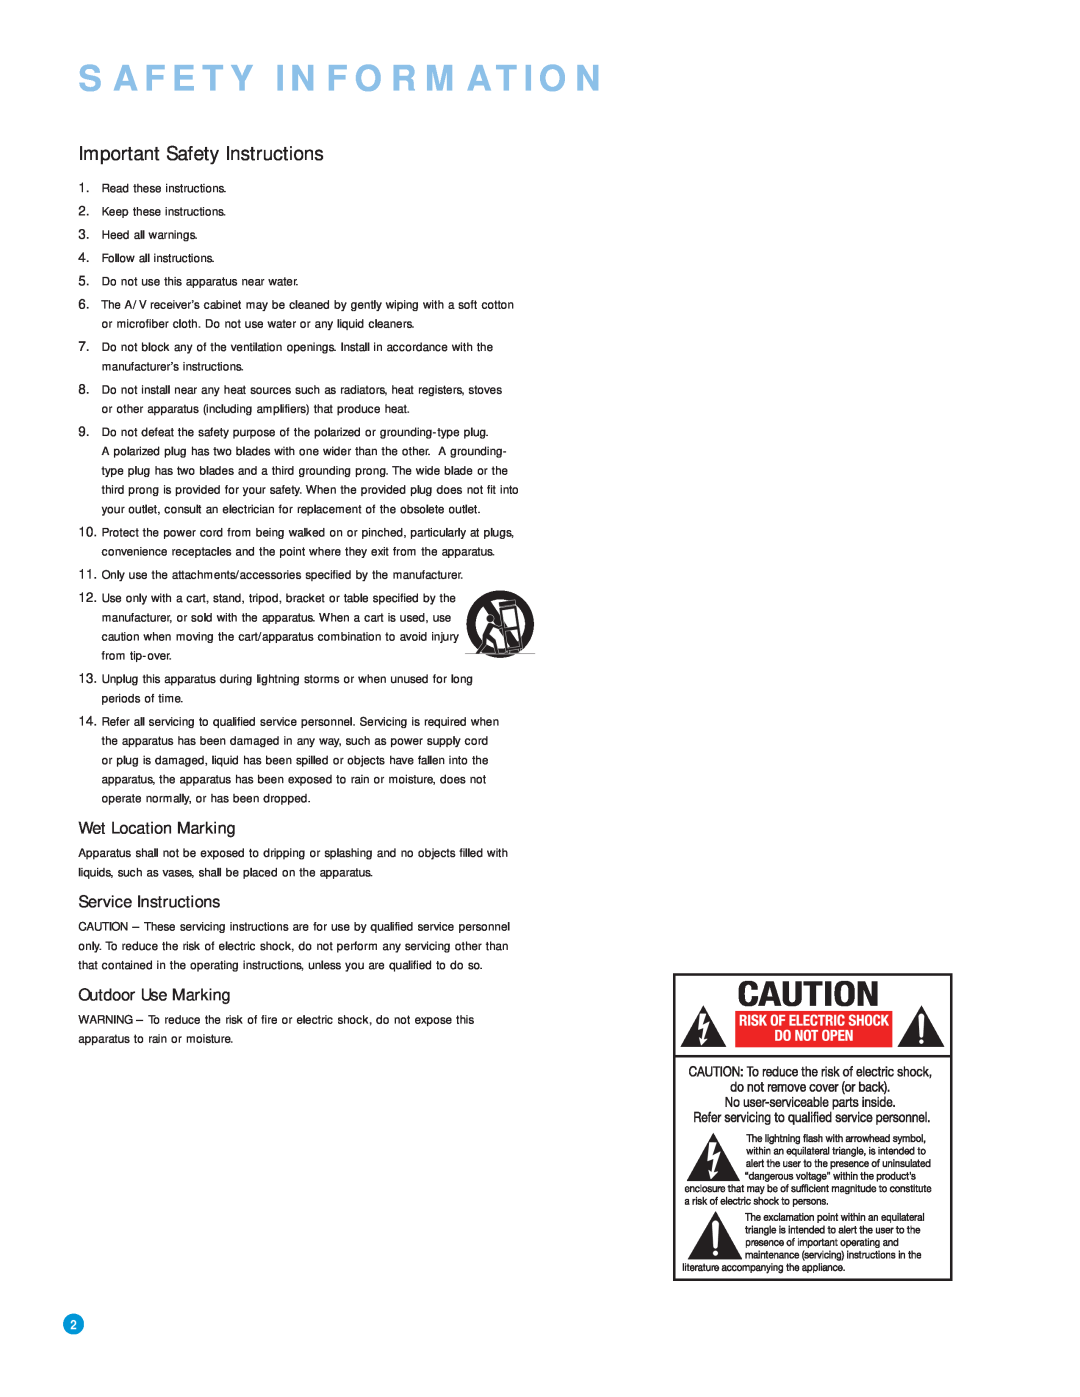 Harman-Kardon AVR 3550HD Safety Information, Important Safety Instructions, Wet Location Marking, Service Instructions 